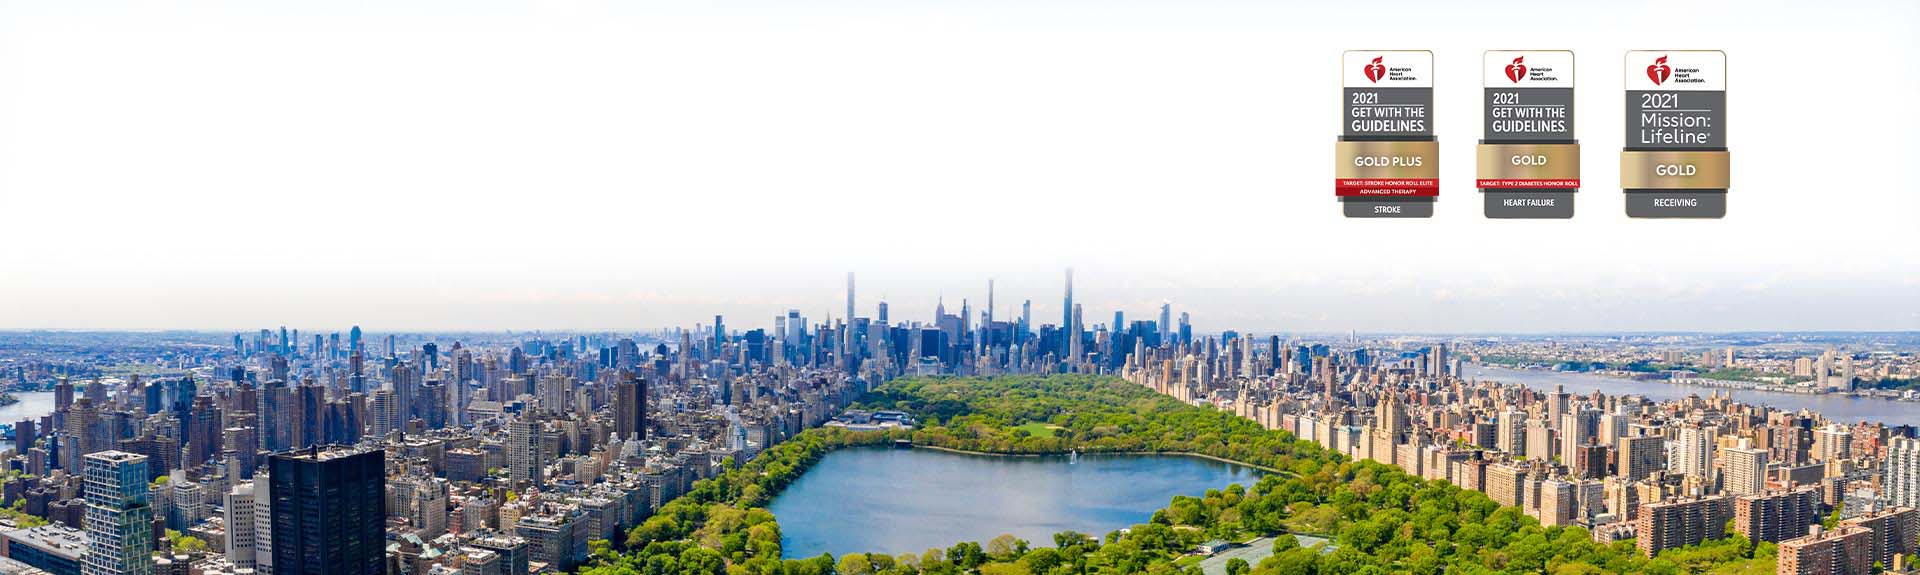 Image of NYC skyline